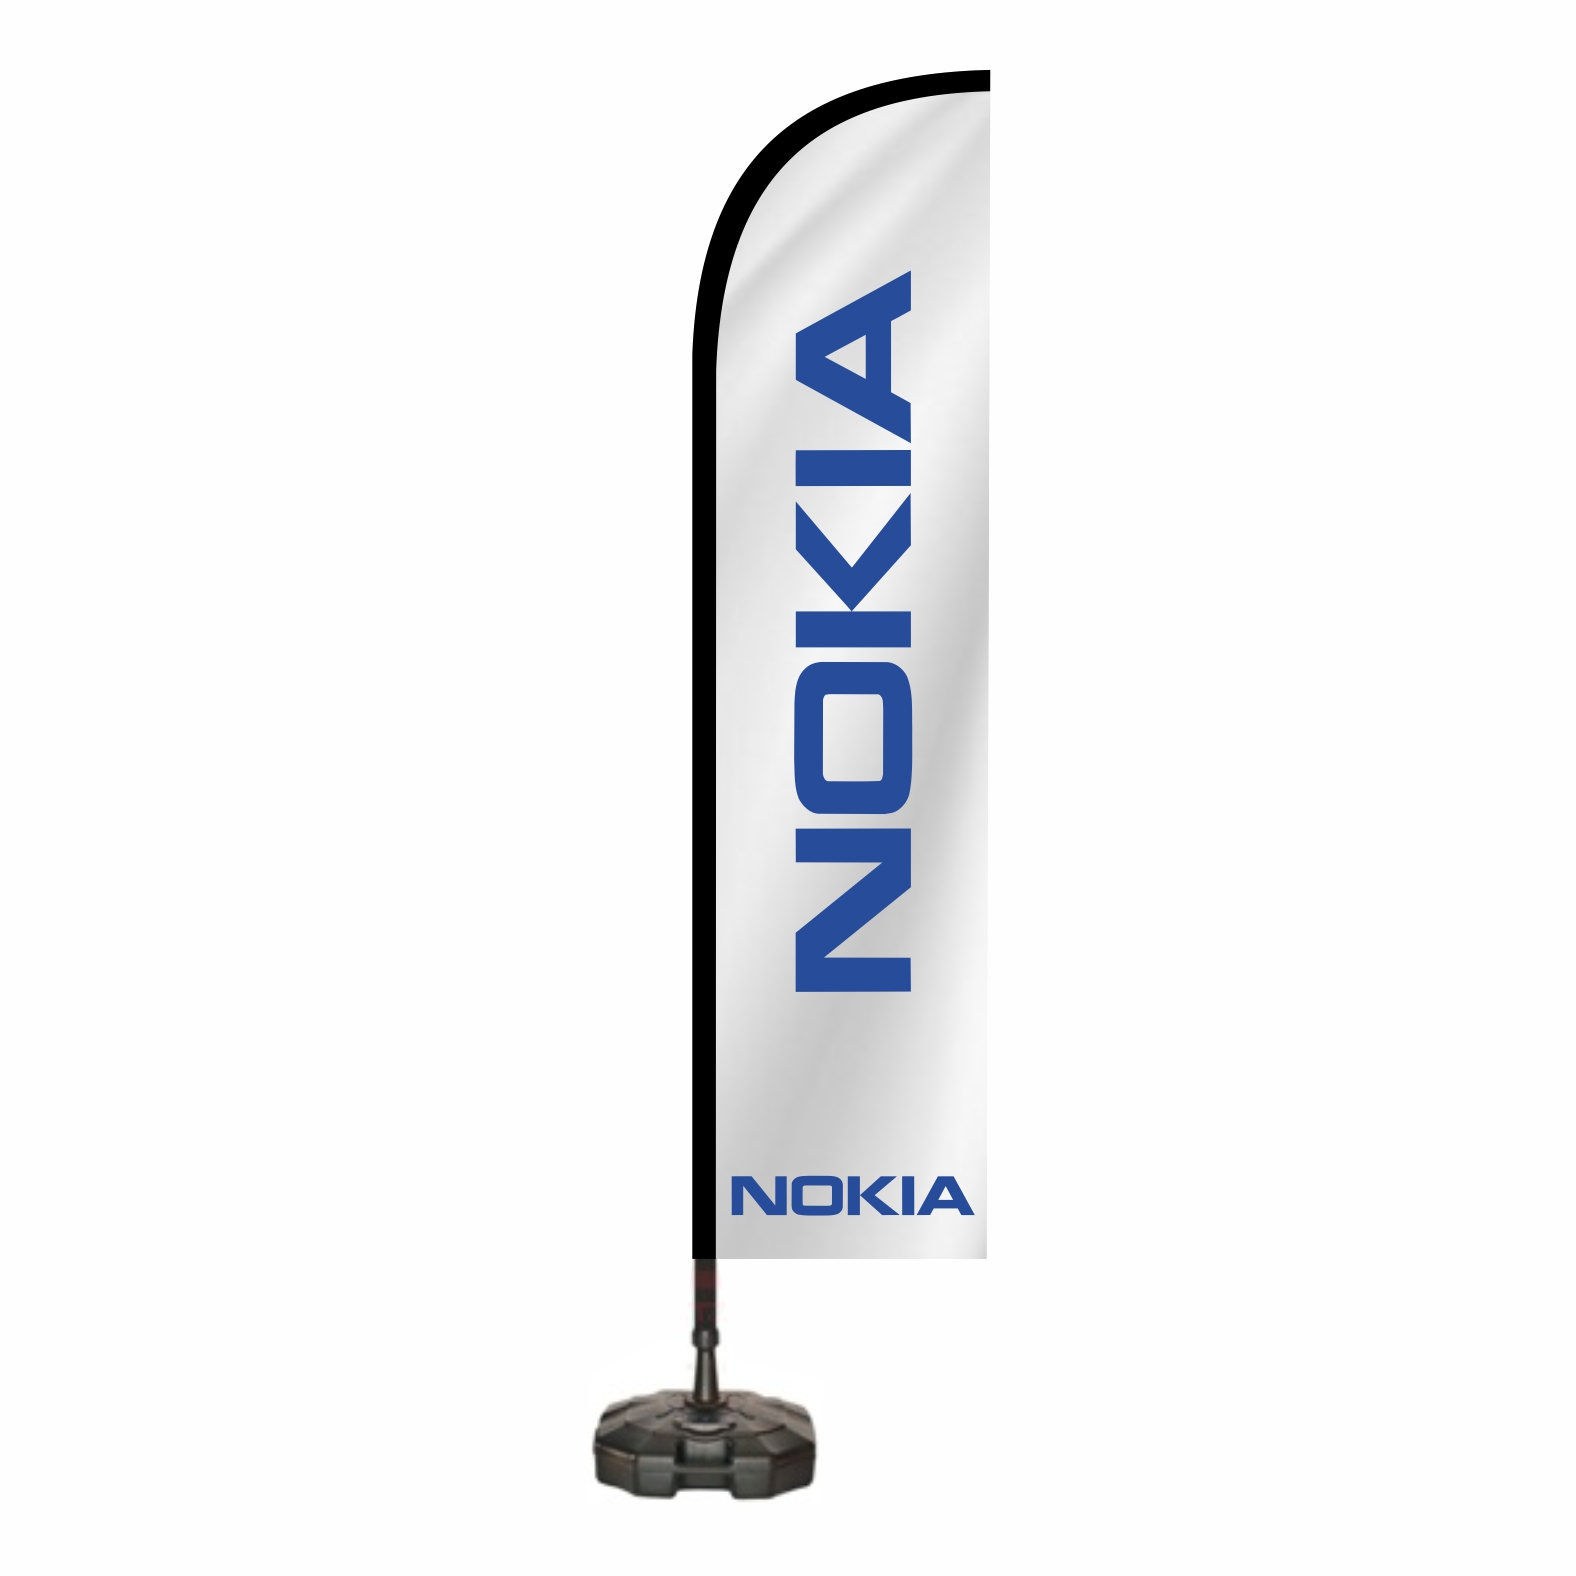 Nokia Plaj Bayra Nerede satlr